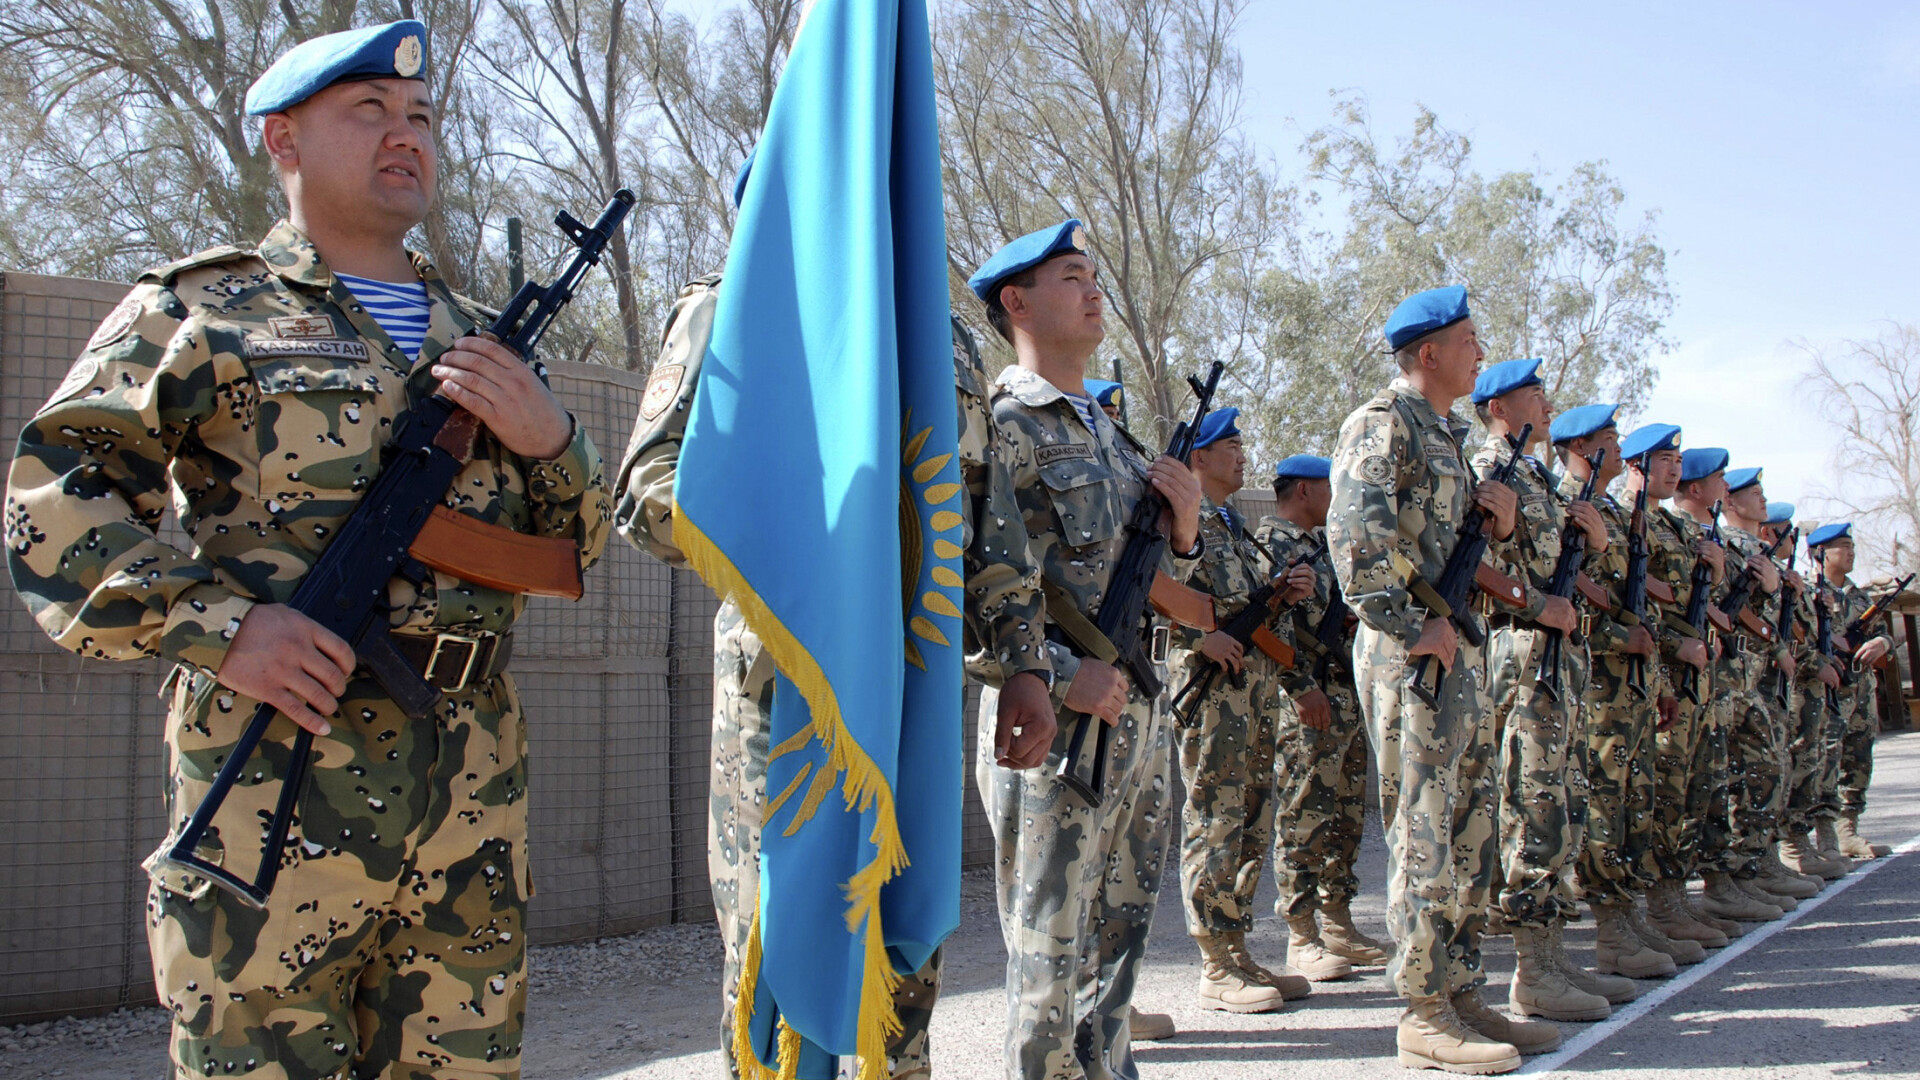 Armata Kazahstan